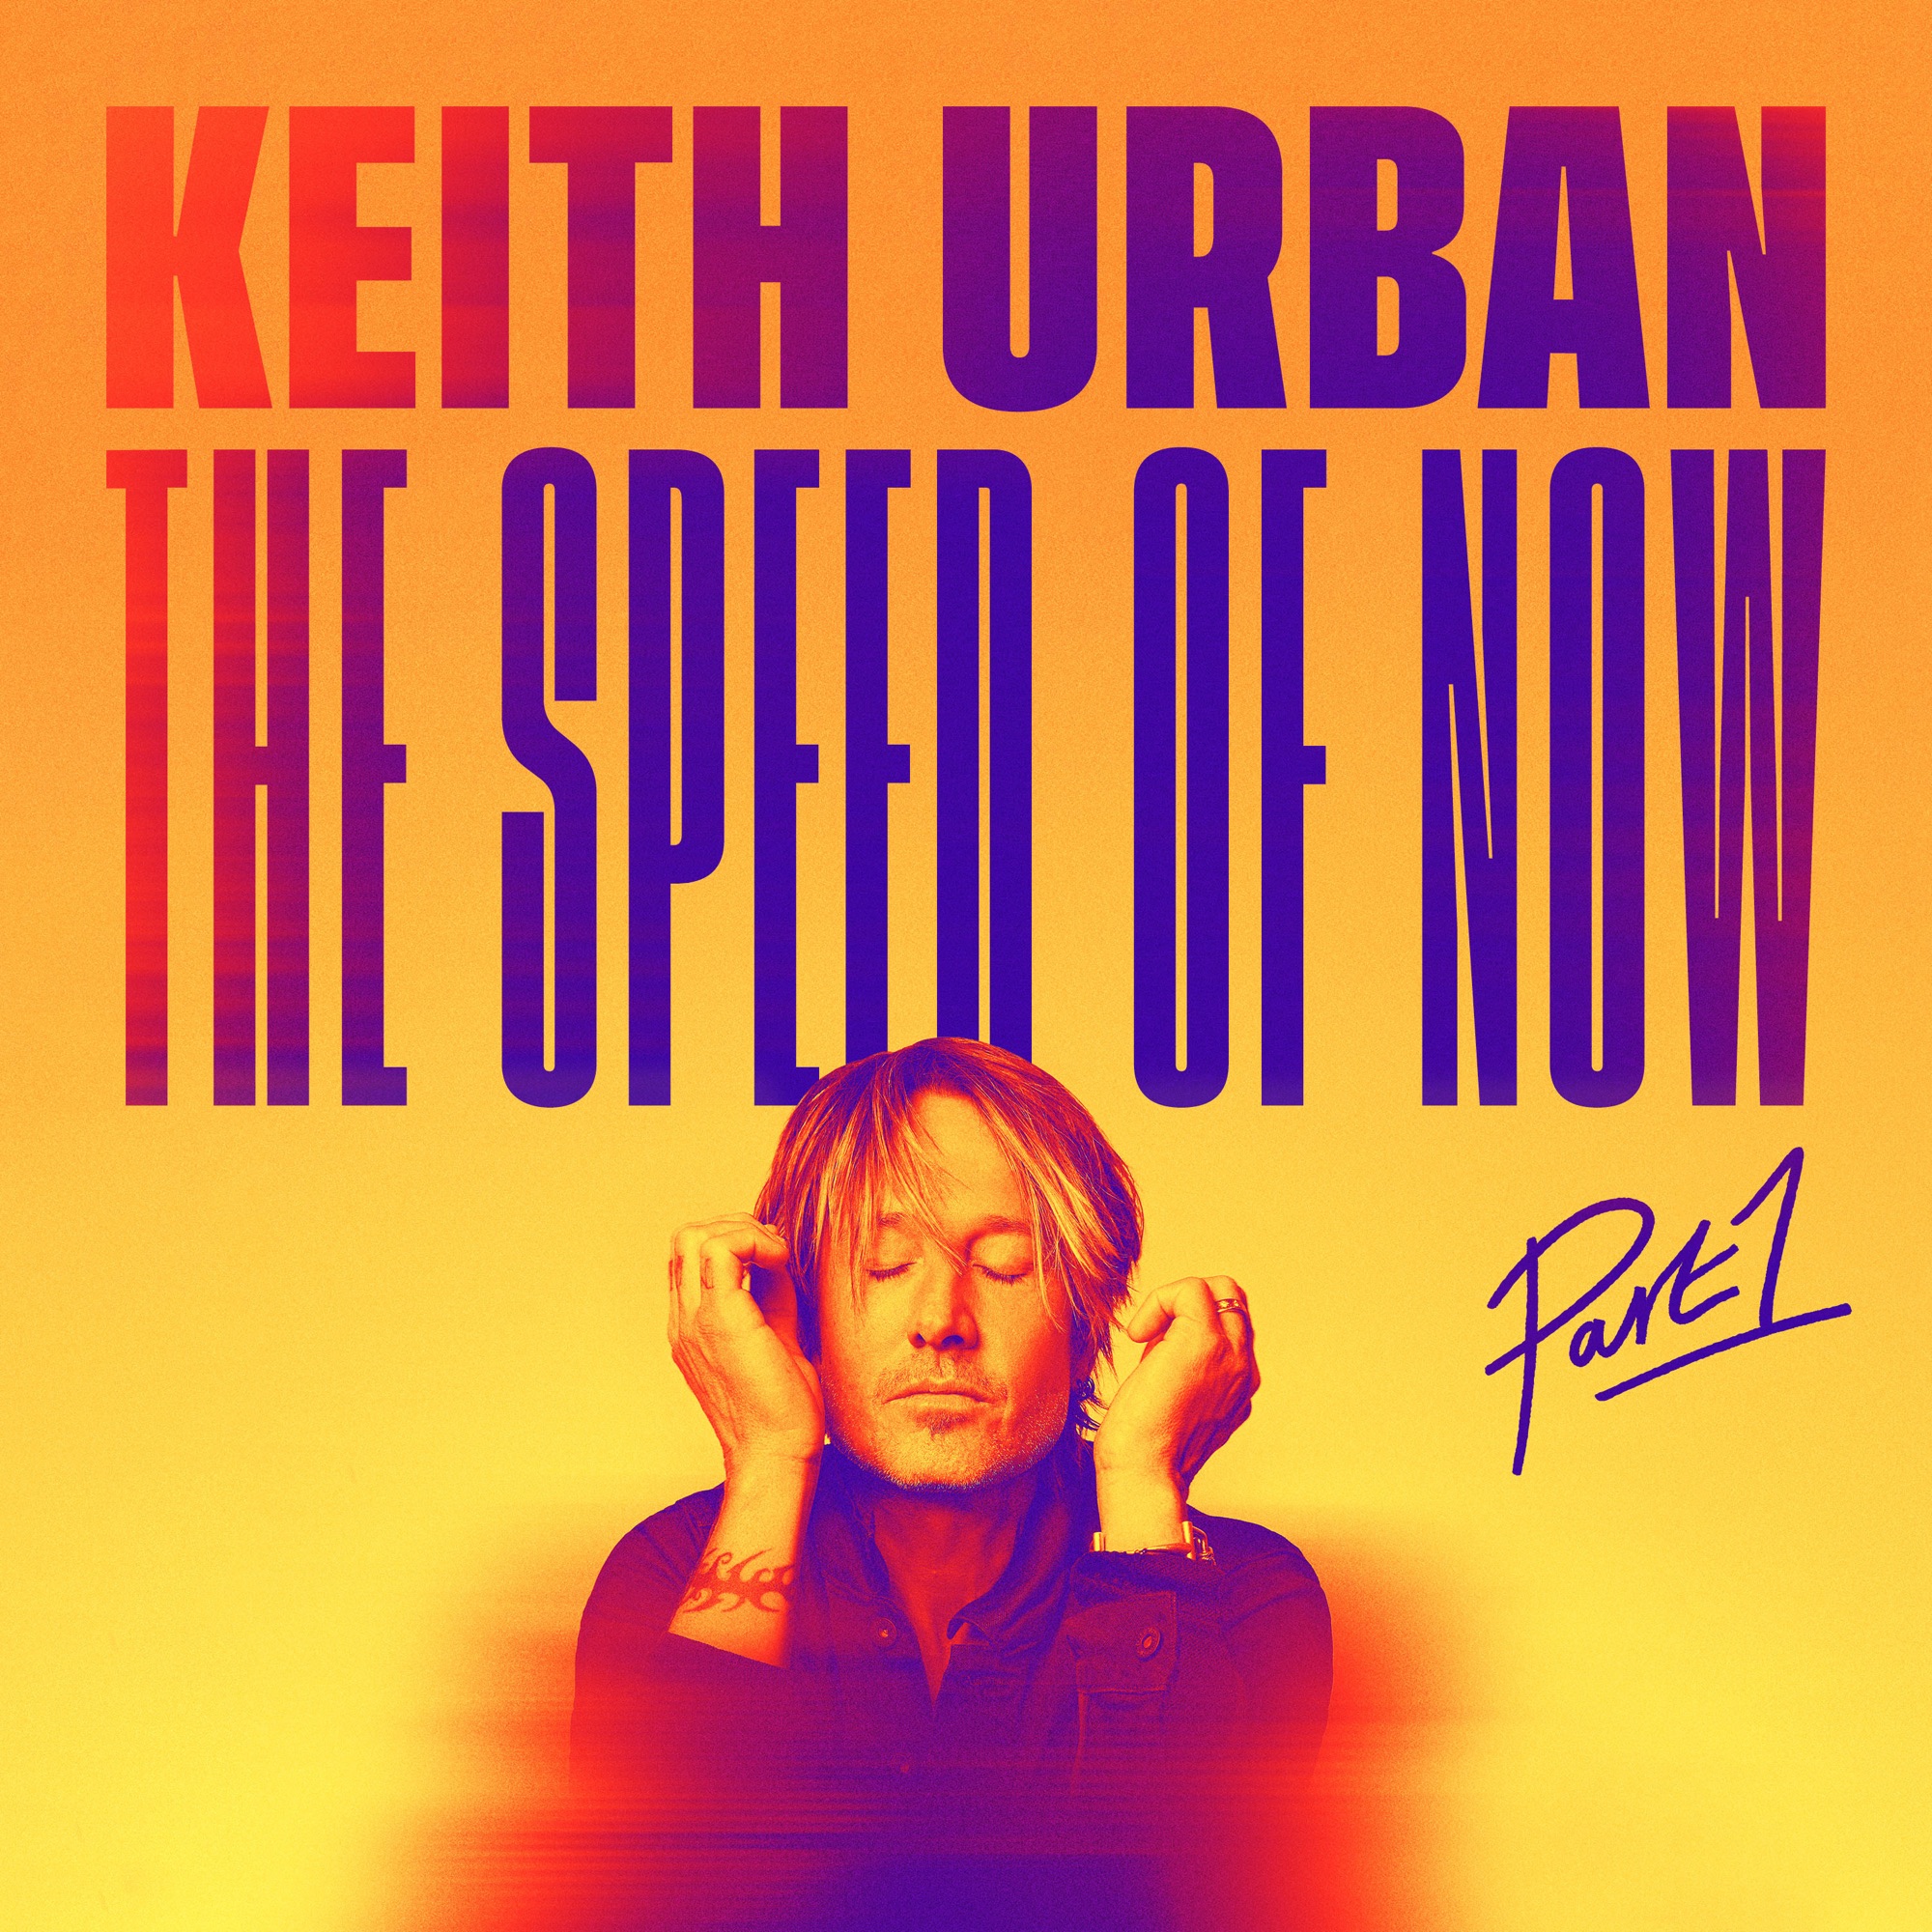 Keith Urban & P!nk - One Too Many - Single